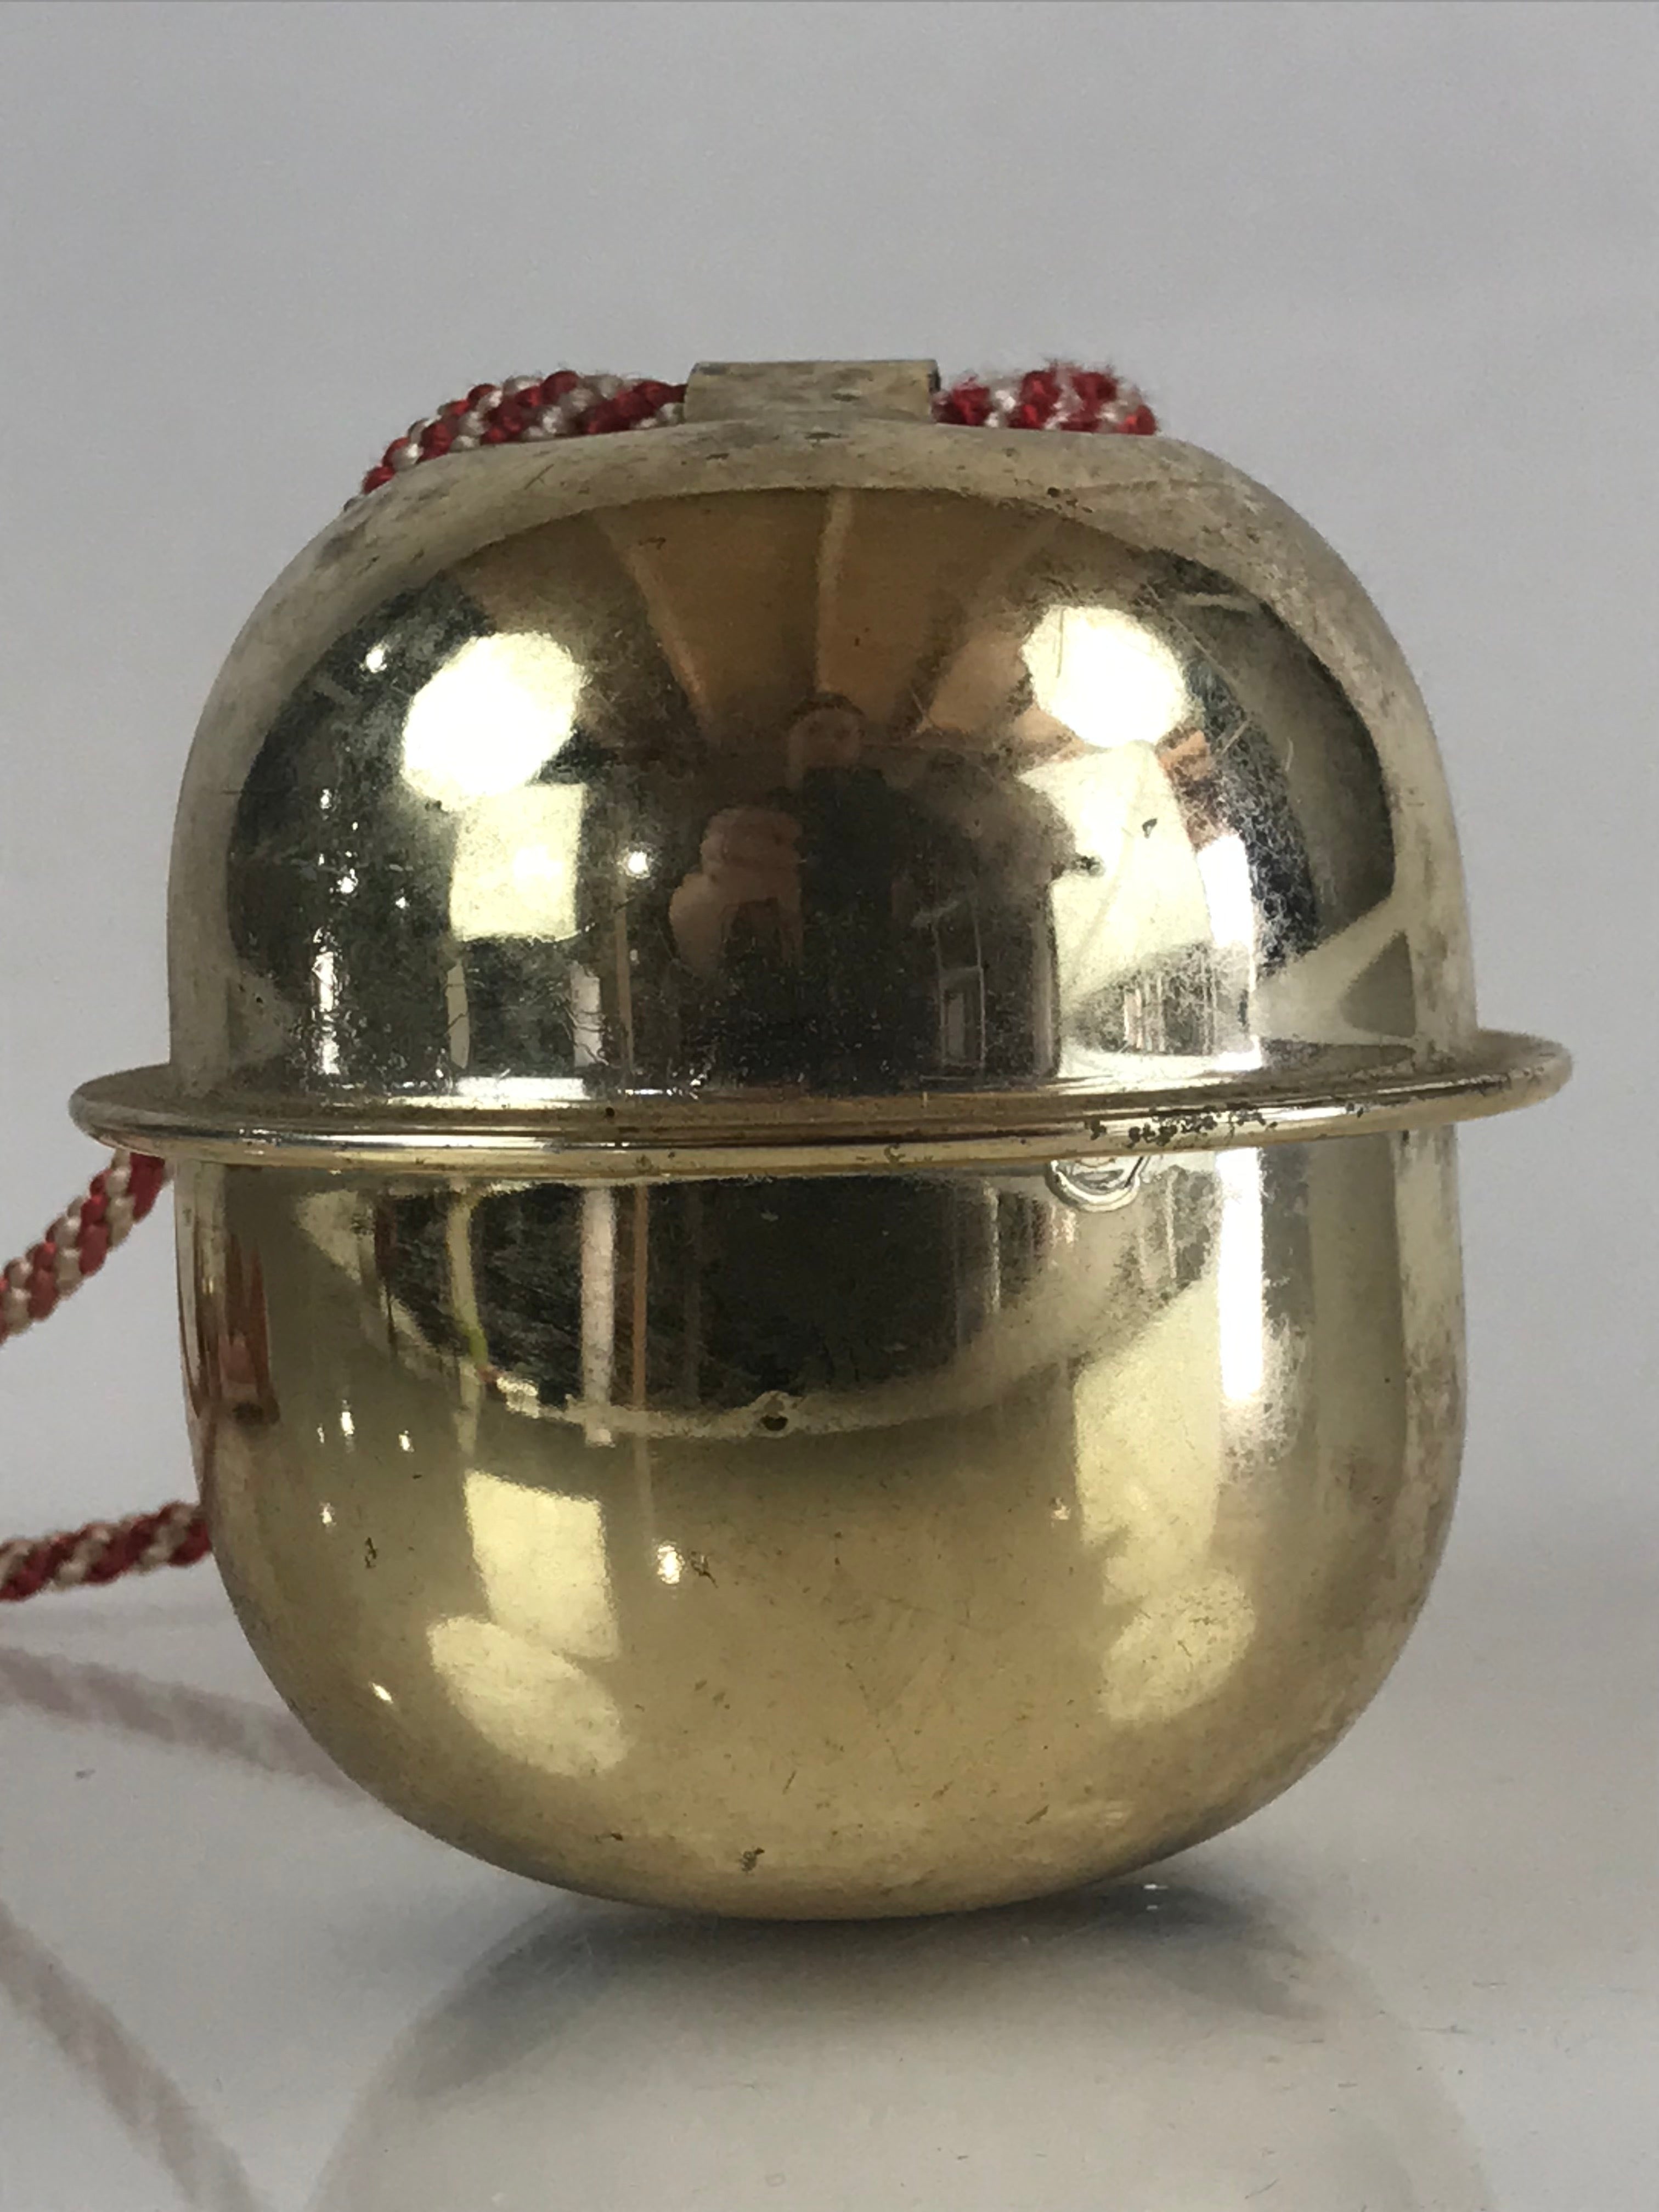 Japanese Iron Big Bell Vtg Bell Amulet Good Luck Traffic Safety Ornament JK394